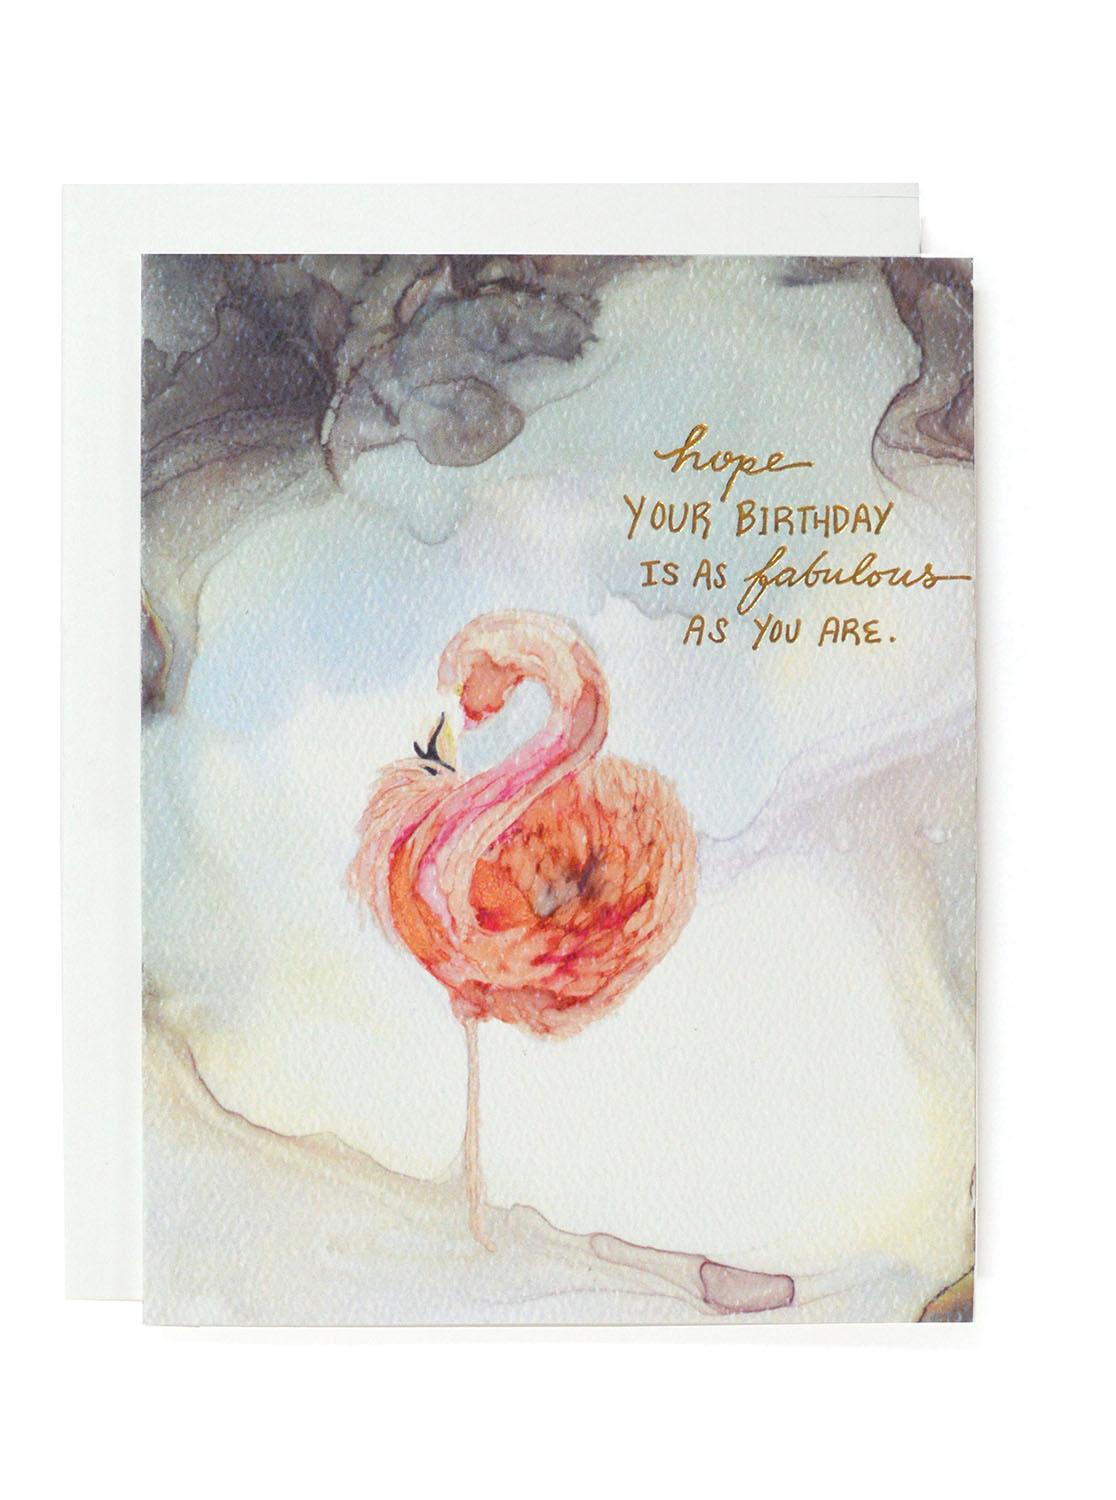 Letterpressed Fabulous Birthday Flamingo Card 
															/ Wild Ink Press							